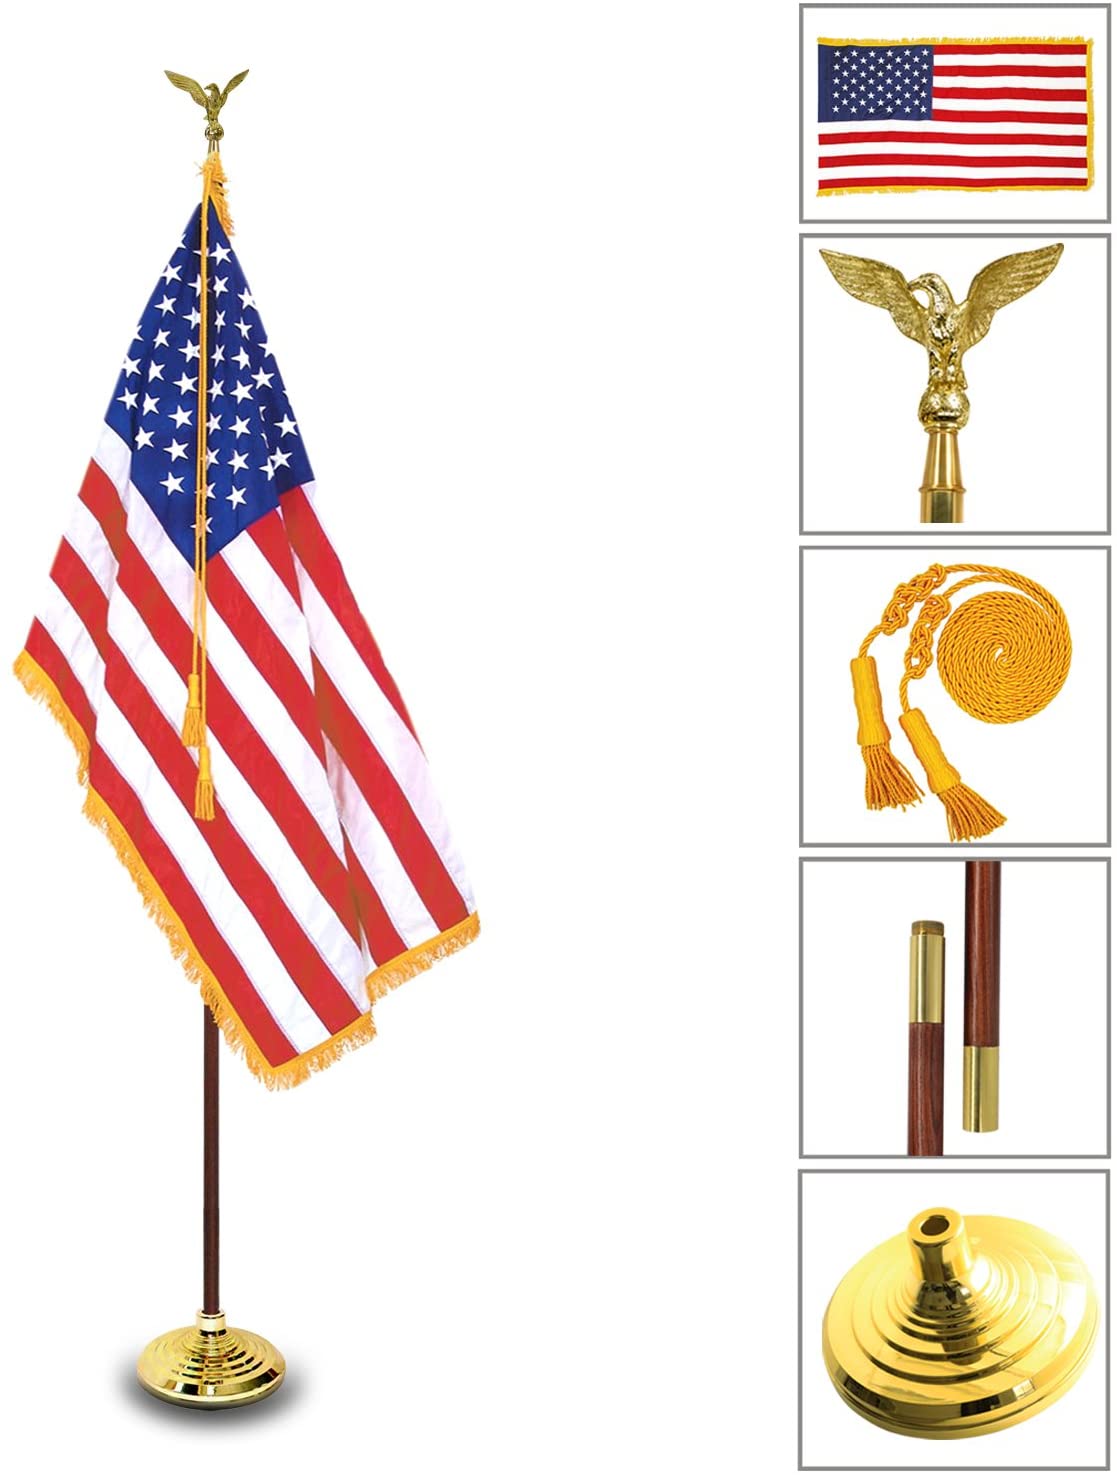 TEC-F101 - U.S.A. Flag with Pole ,Stand, Gold Tassel, Gold Eagle